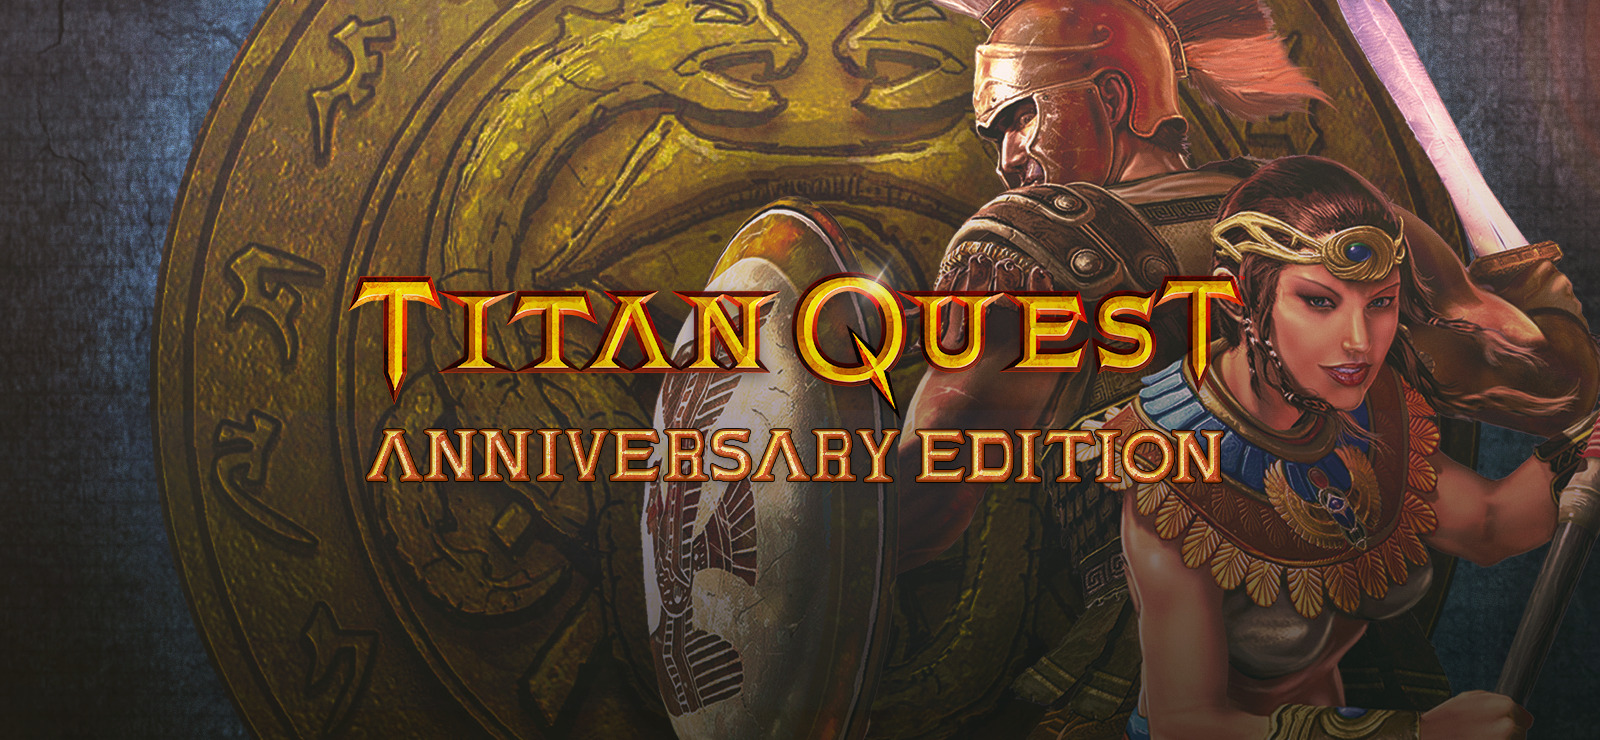  تحميل لعبة Titan Quest Anniversary Edition بحجم صغير من ماي ايجي